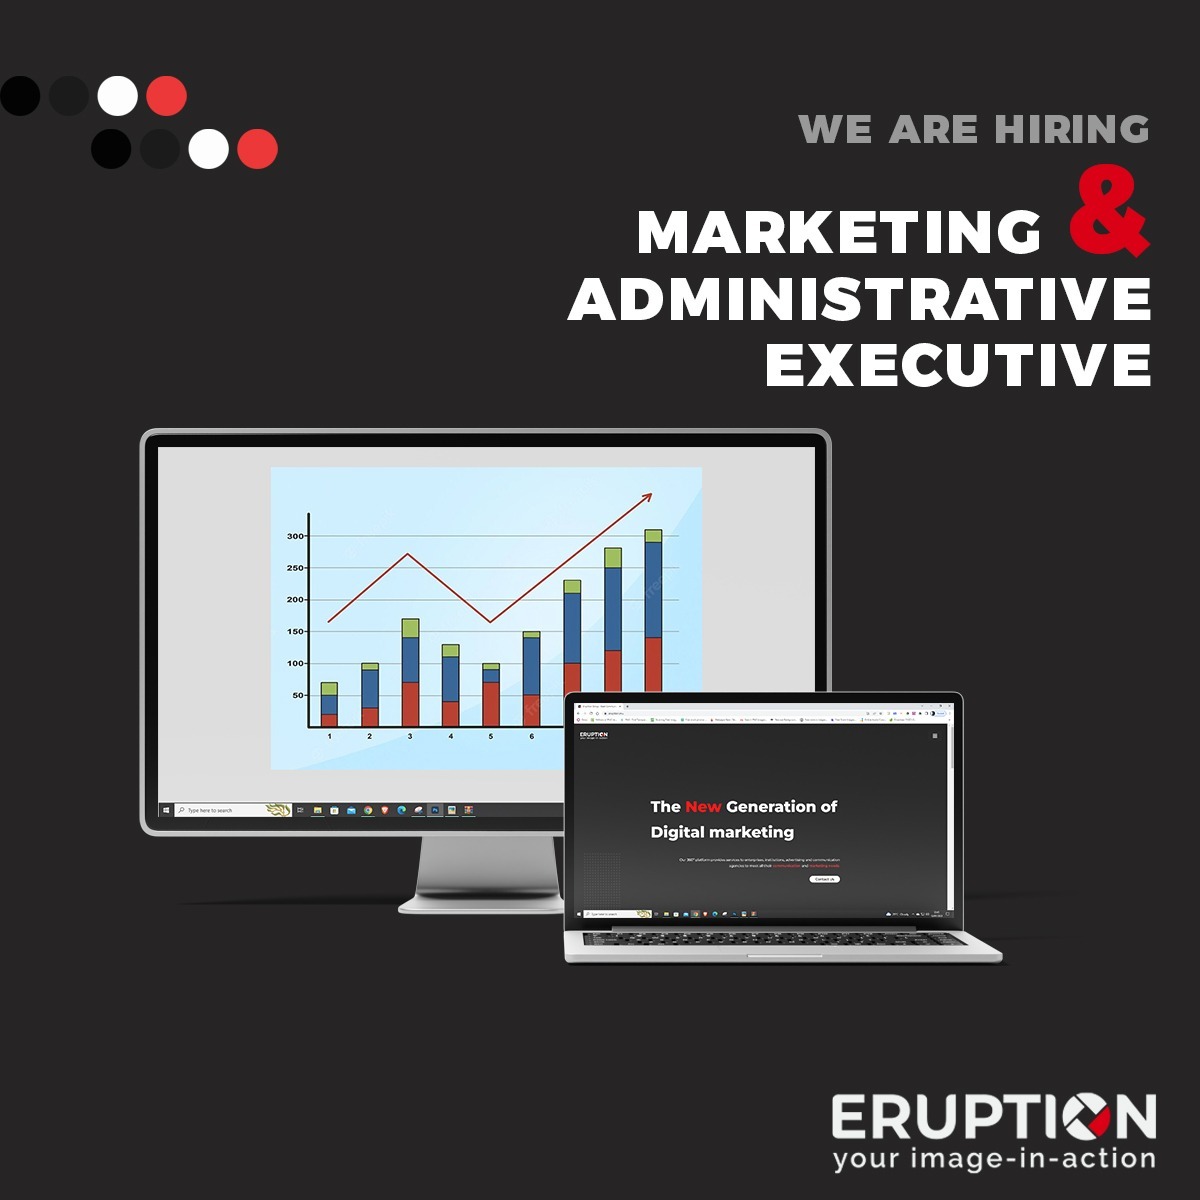 Marketing & administrative executive